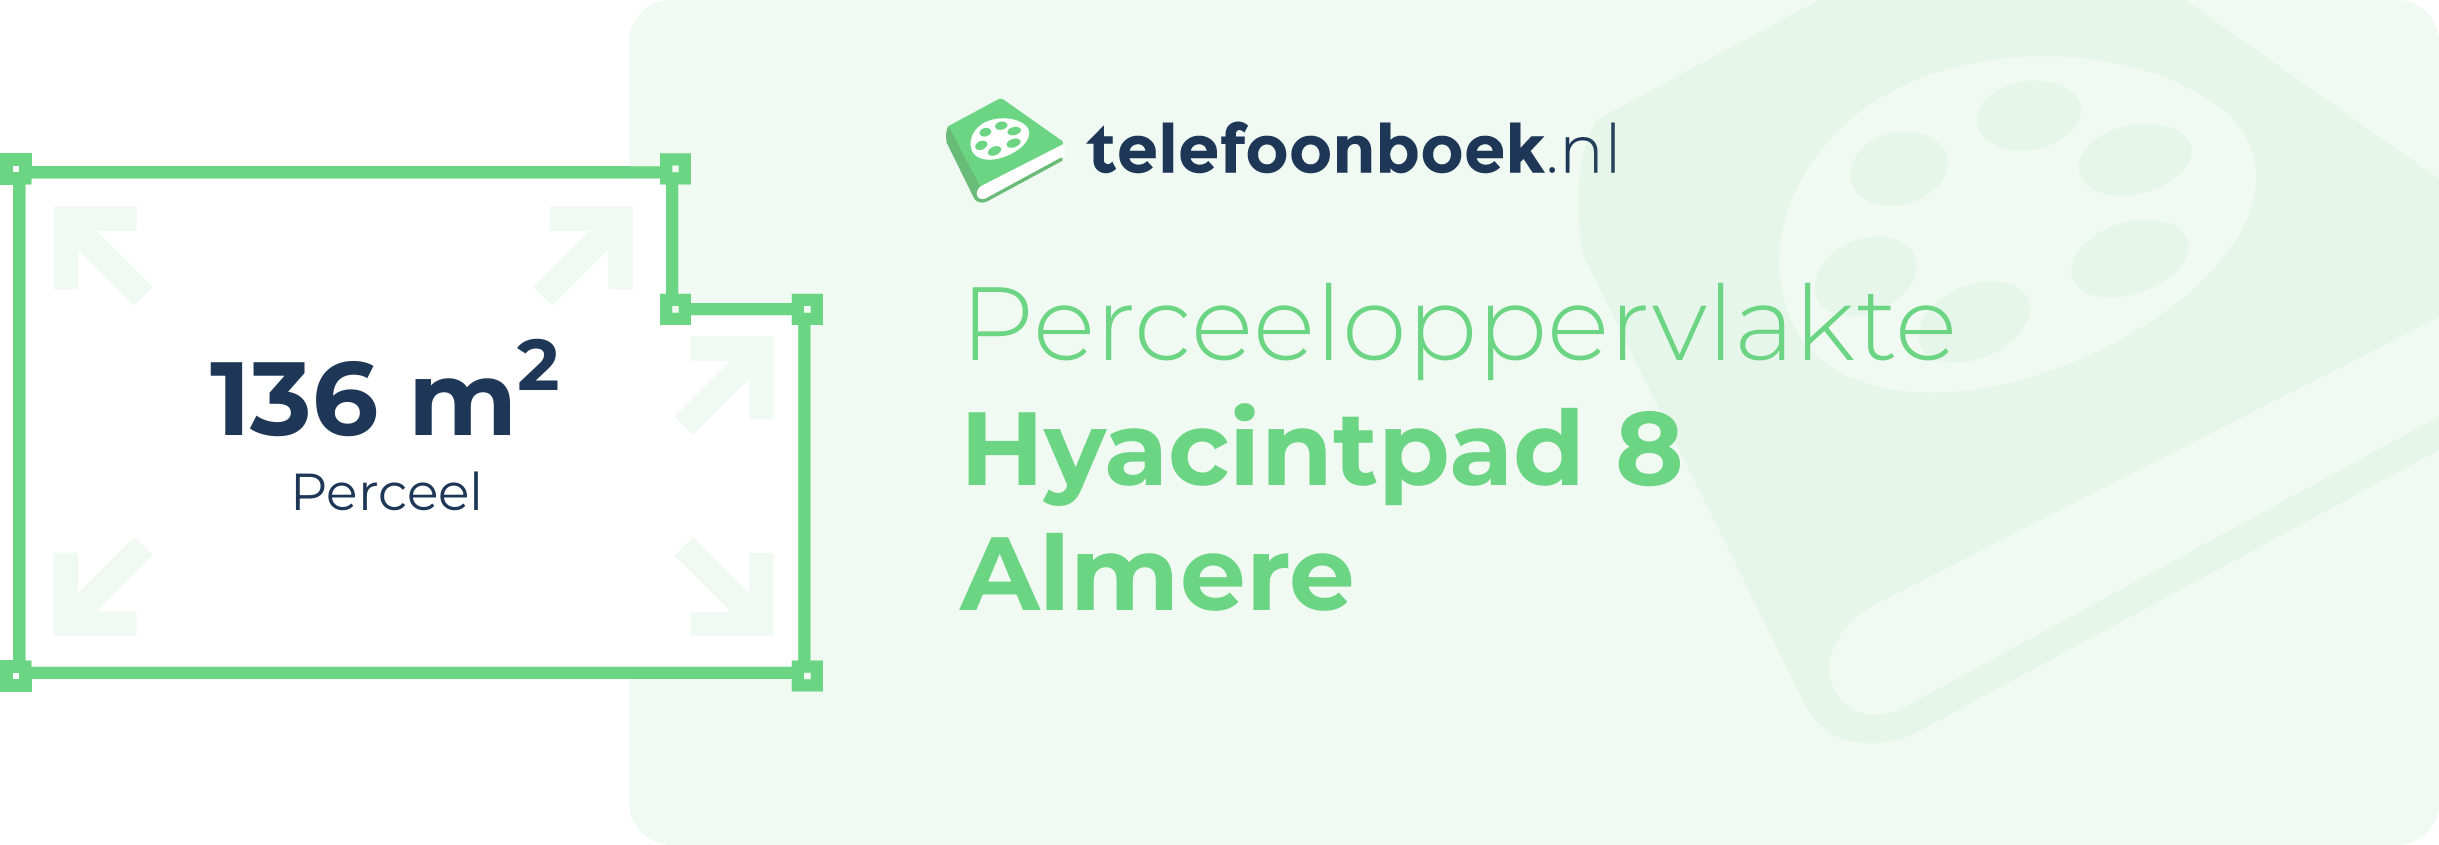 Perceeloppervlakte Hyacintpad 8 Almere